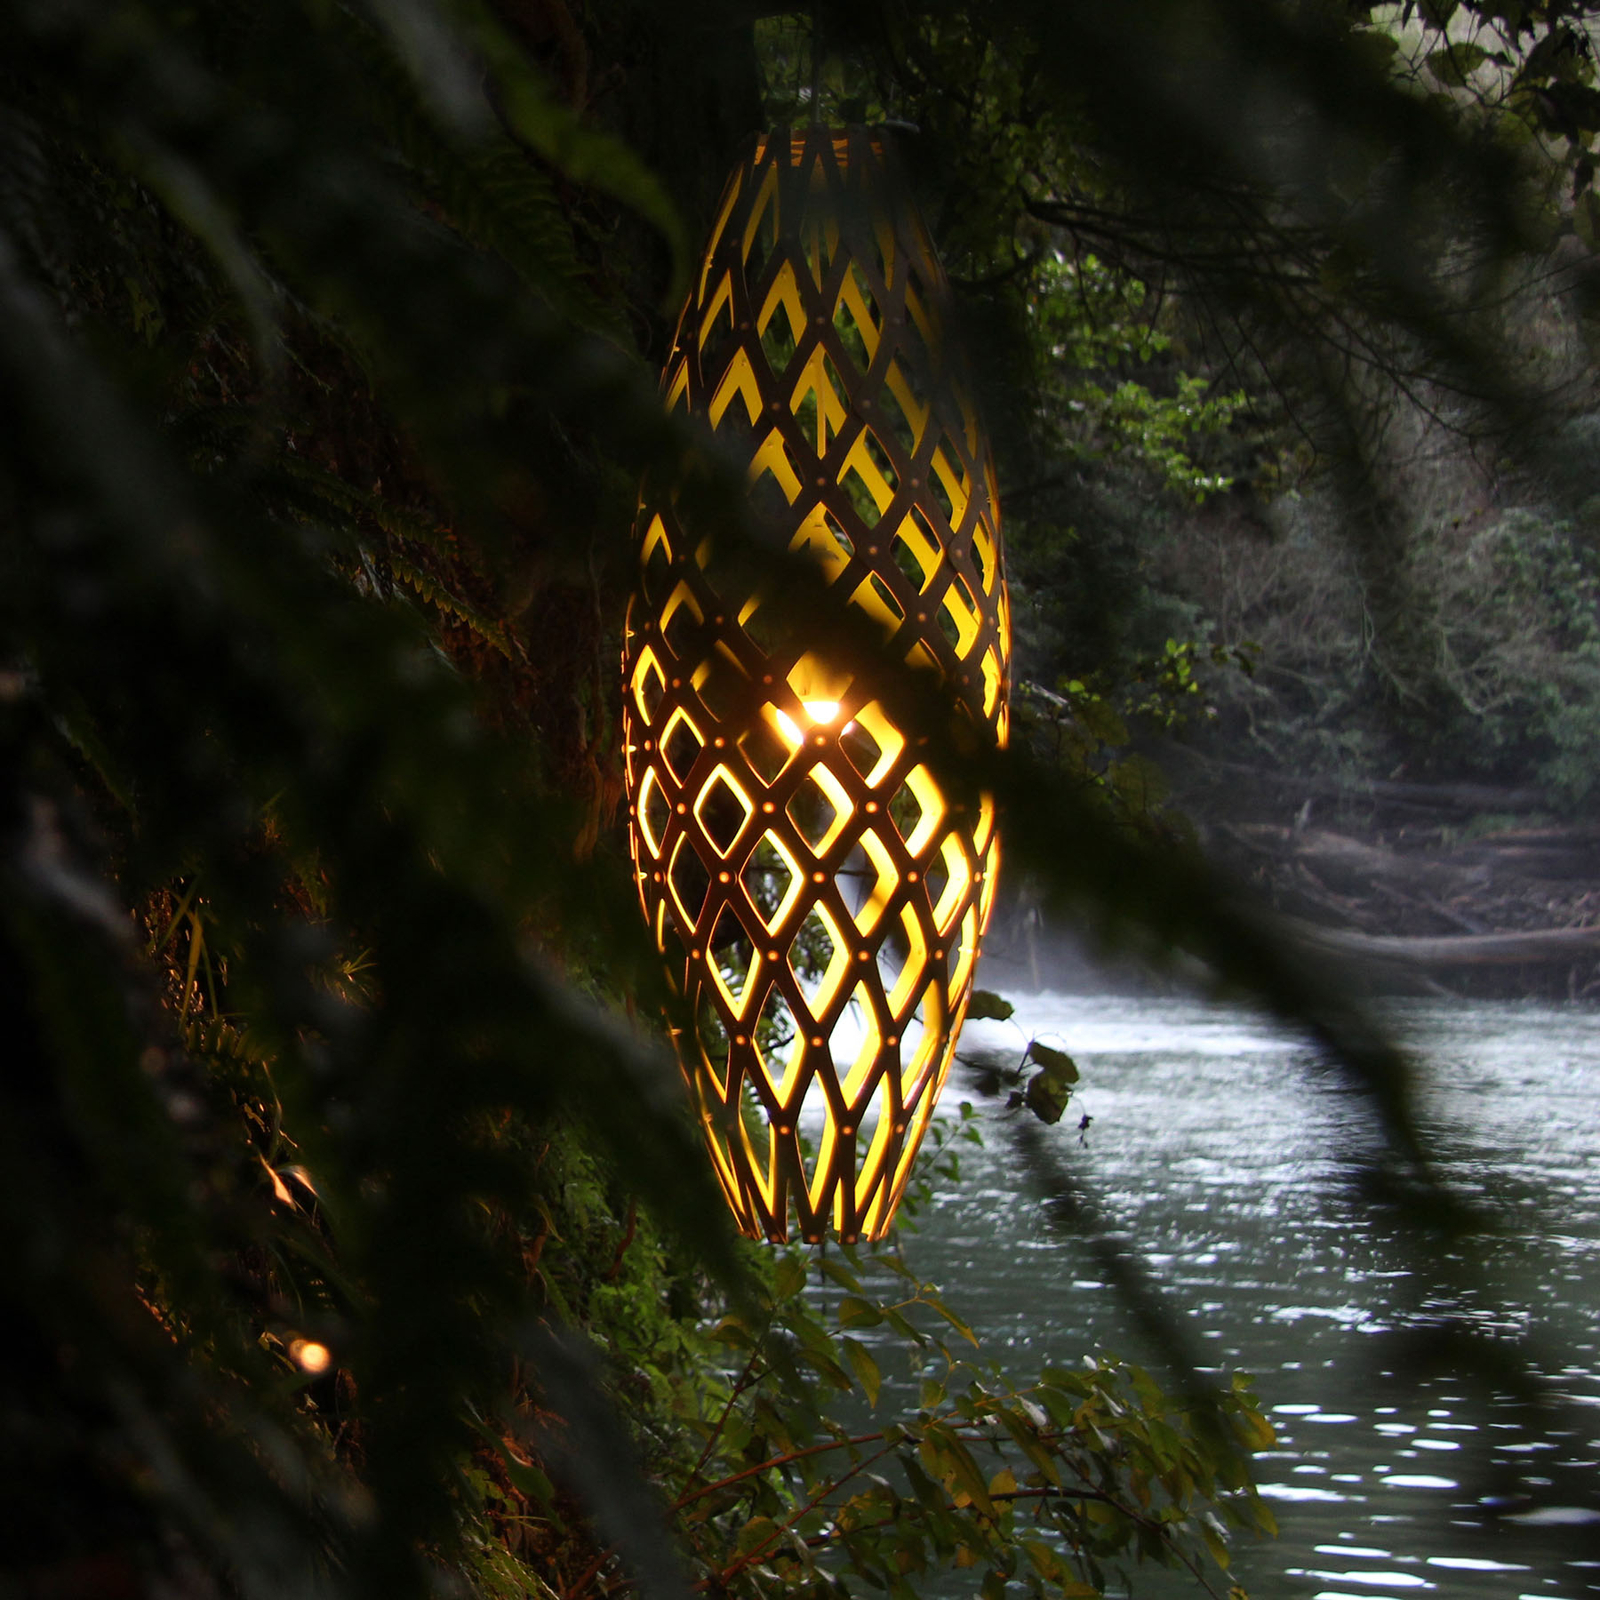 david trubridge Hinaki hanging light 50cm bamboo